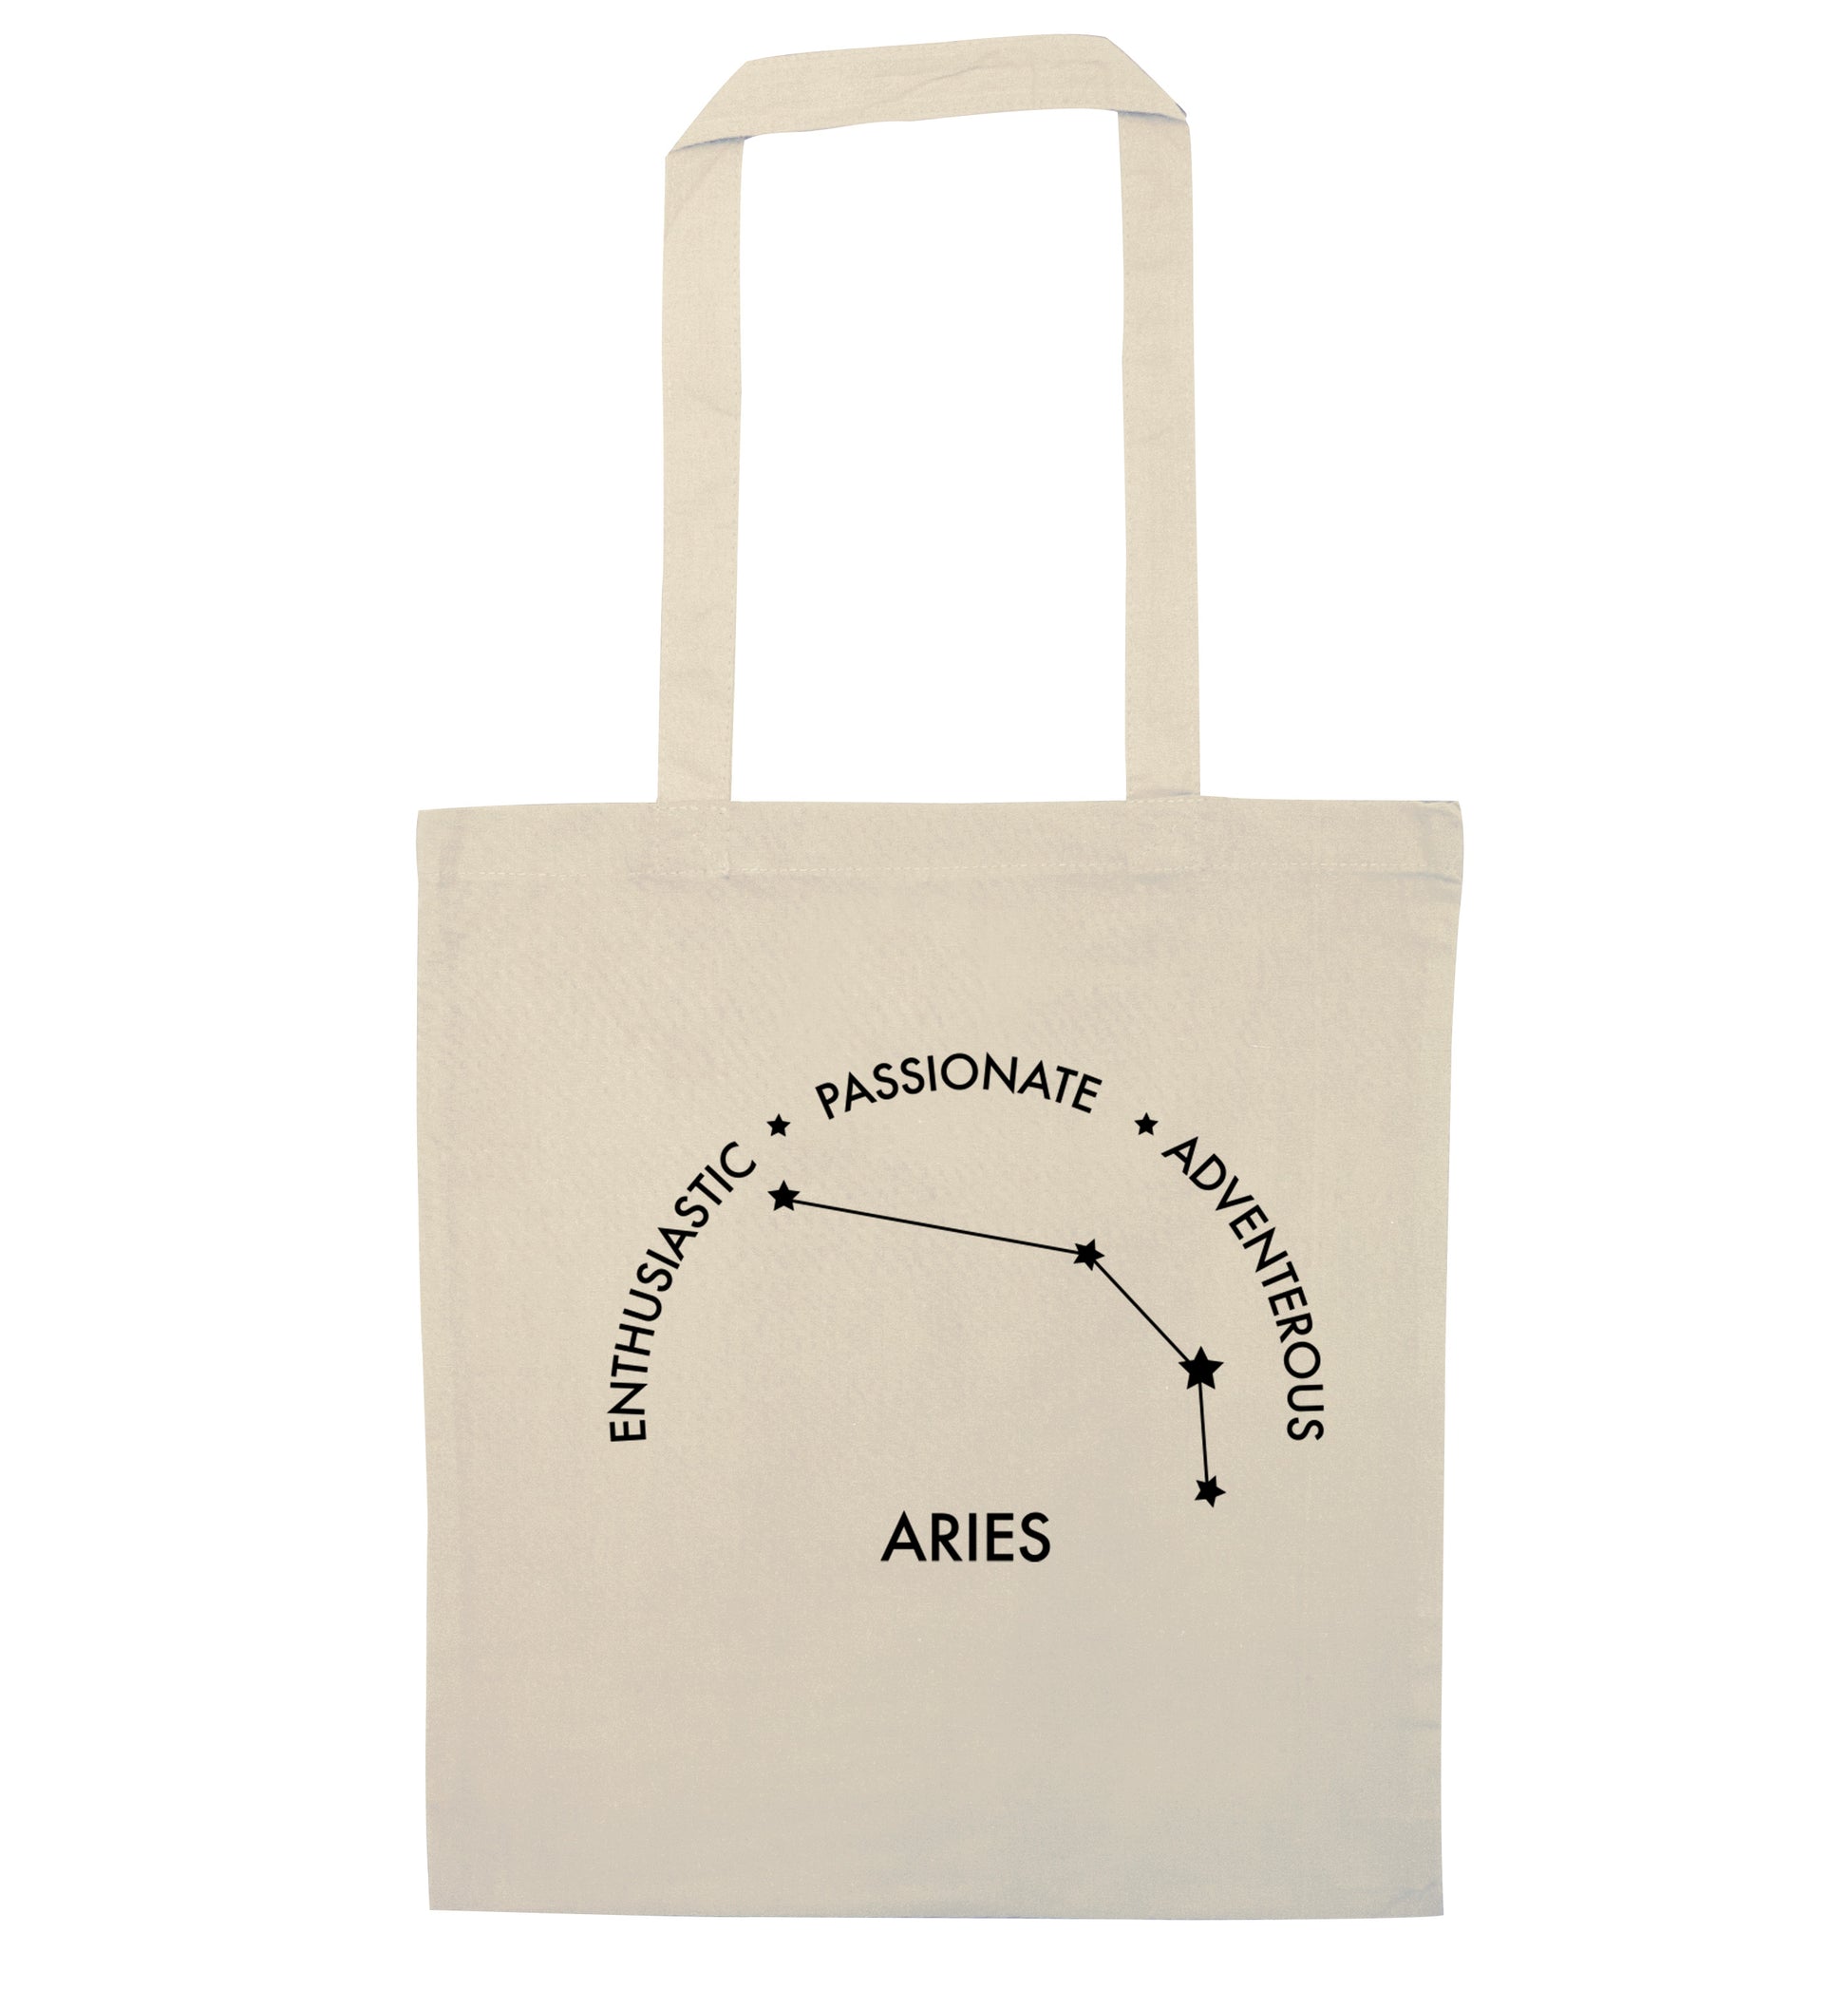 Aries enthusiastic | passionate | adventerous natural tote bag